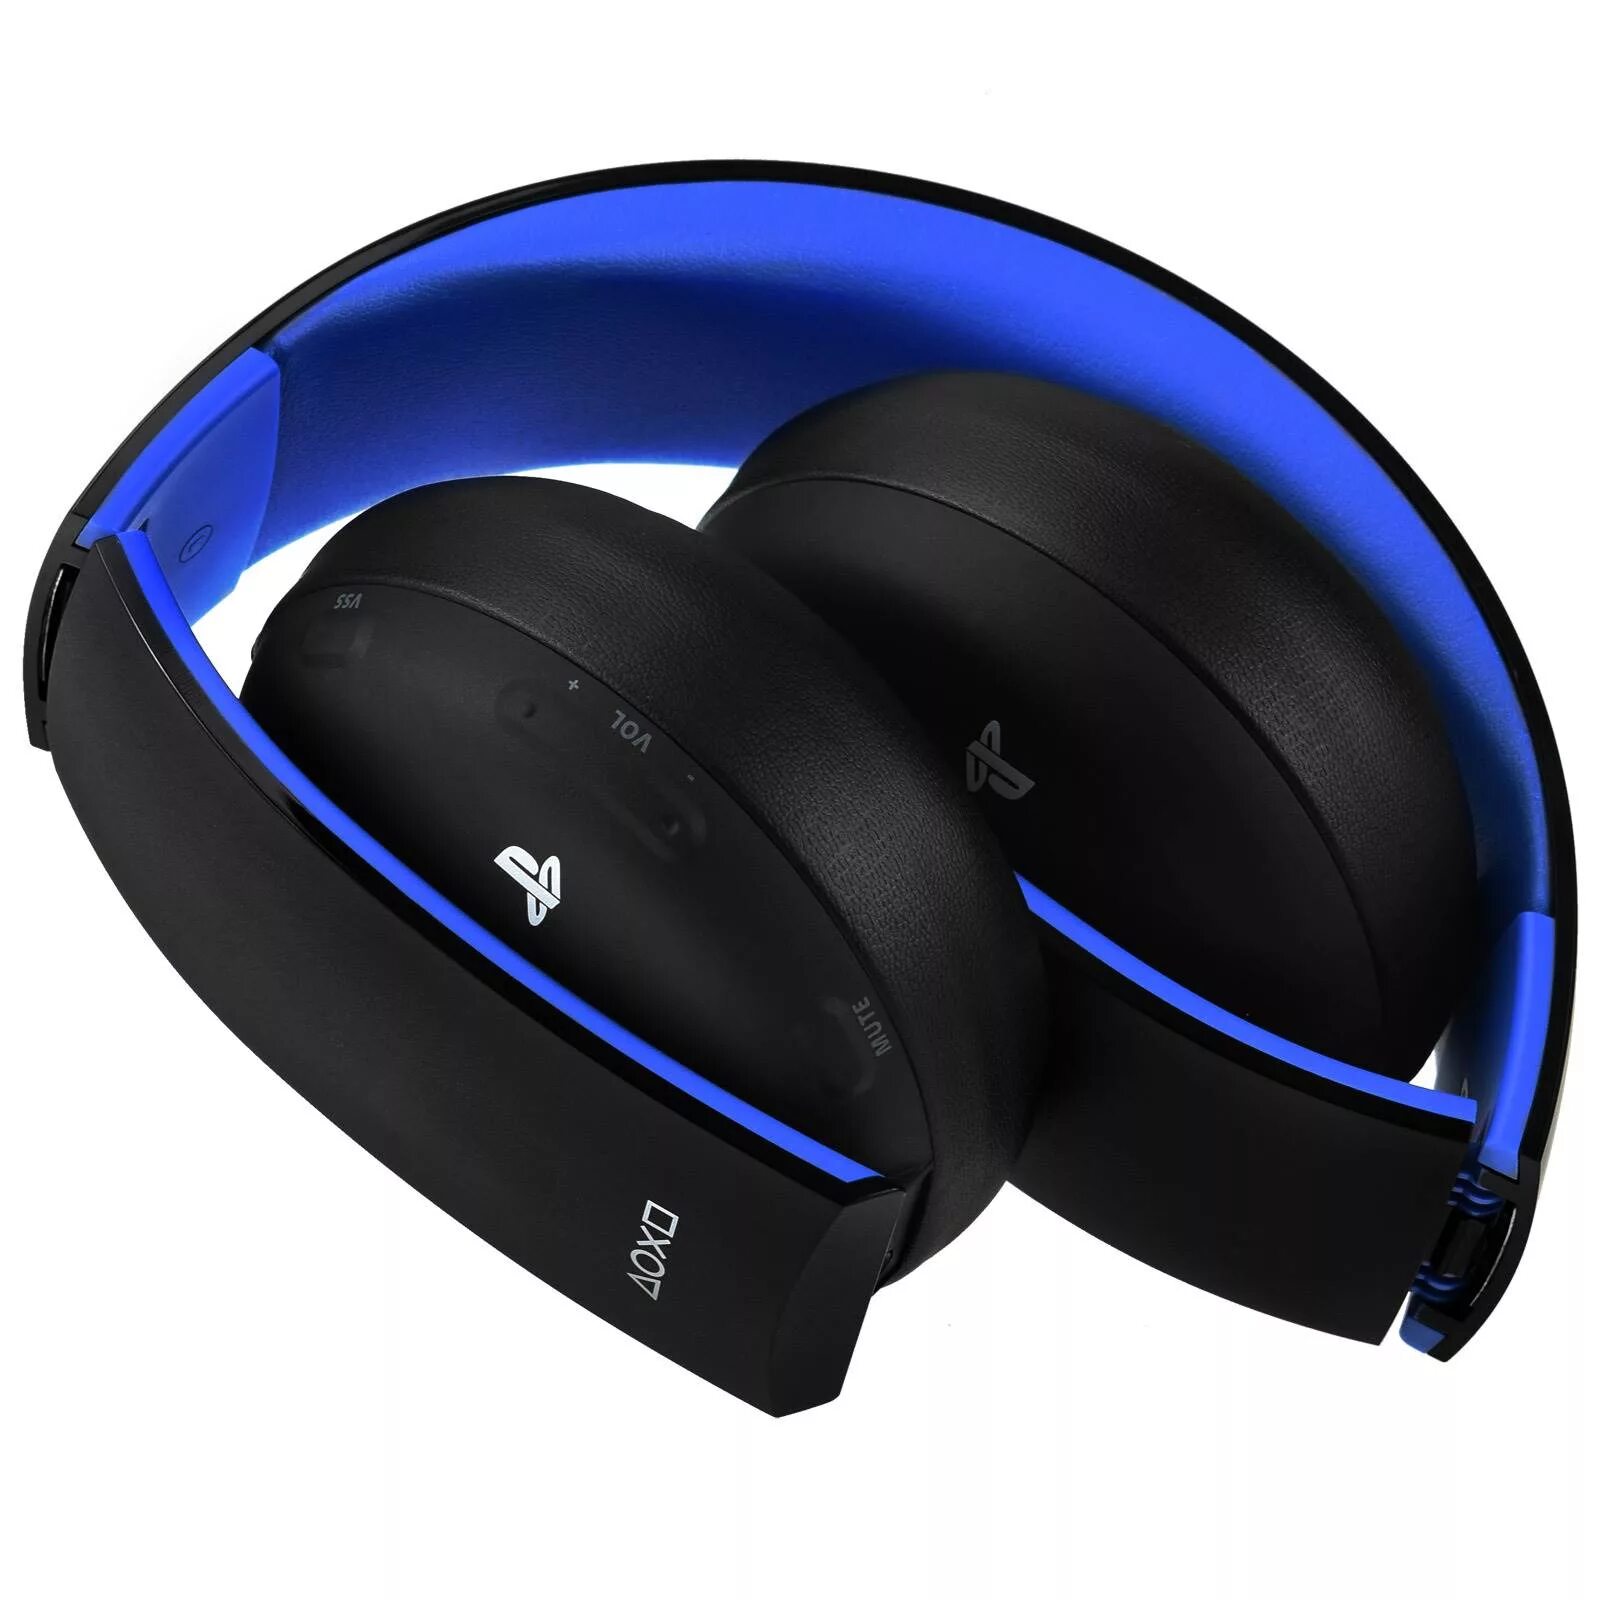 Sony PLAYSTATION Wireless stereo Headset 2.0. Наушники Sony беспроводные Wireless stereo Headset. Sony Wireless stereo Headset 2.0 аккумулятор. Wireless stereo Headset n1152. Официальные магазины наушников